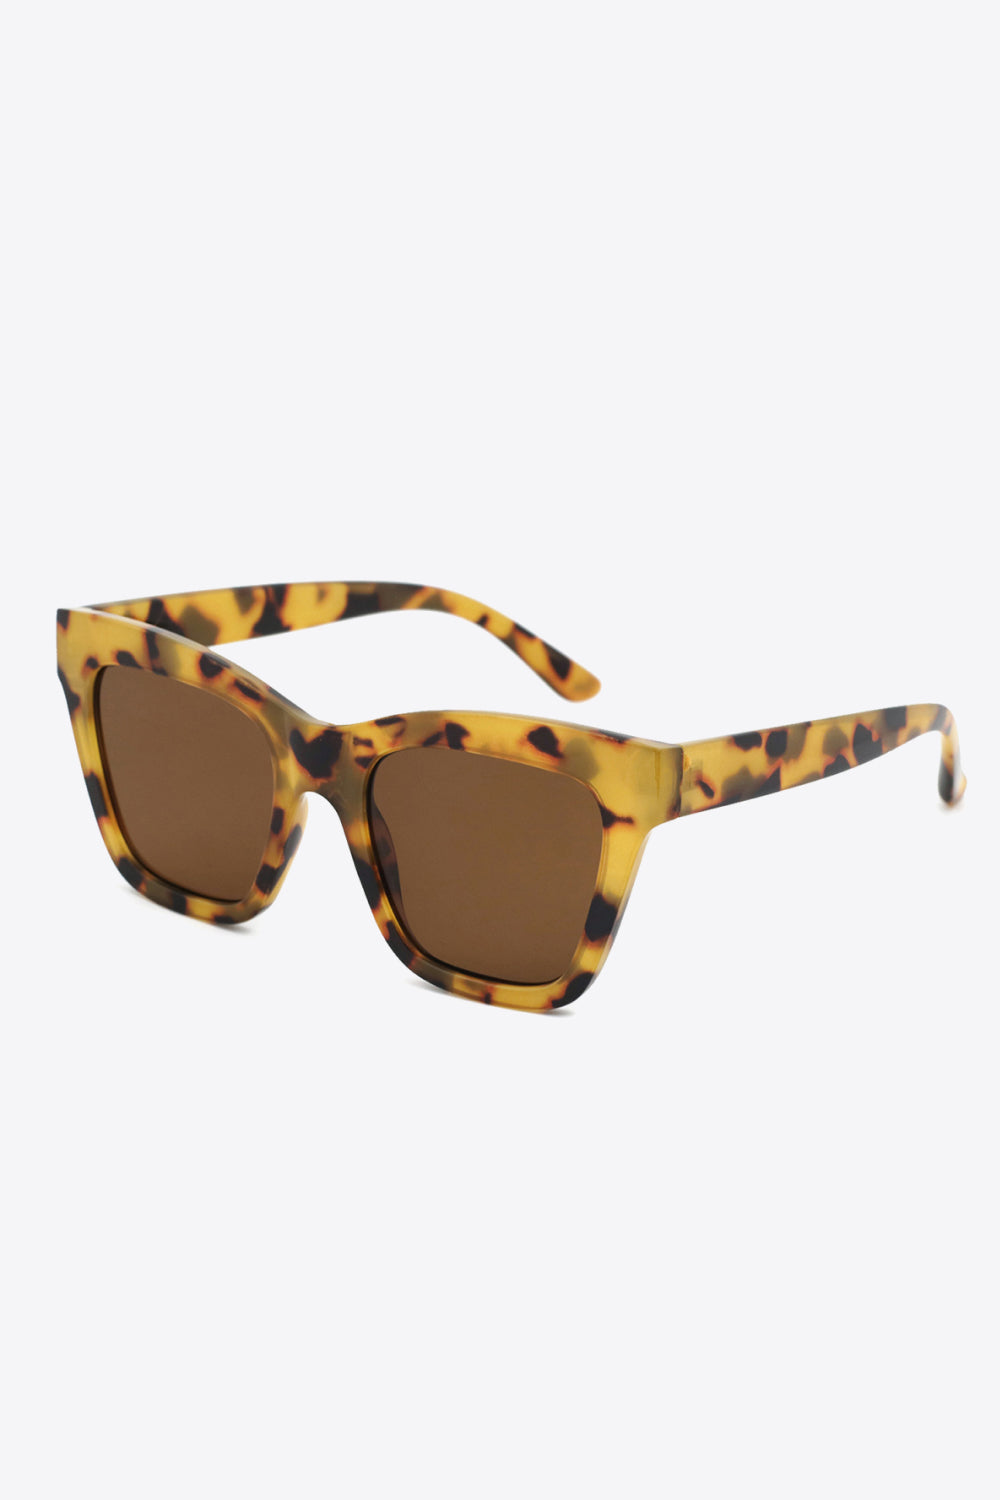 Acetate Lens UV400 Sunglasses - BEAUTY COSMOTICS SHOP